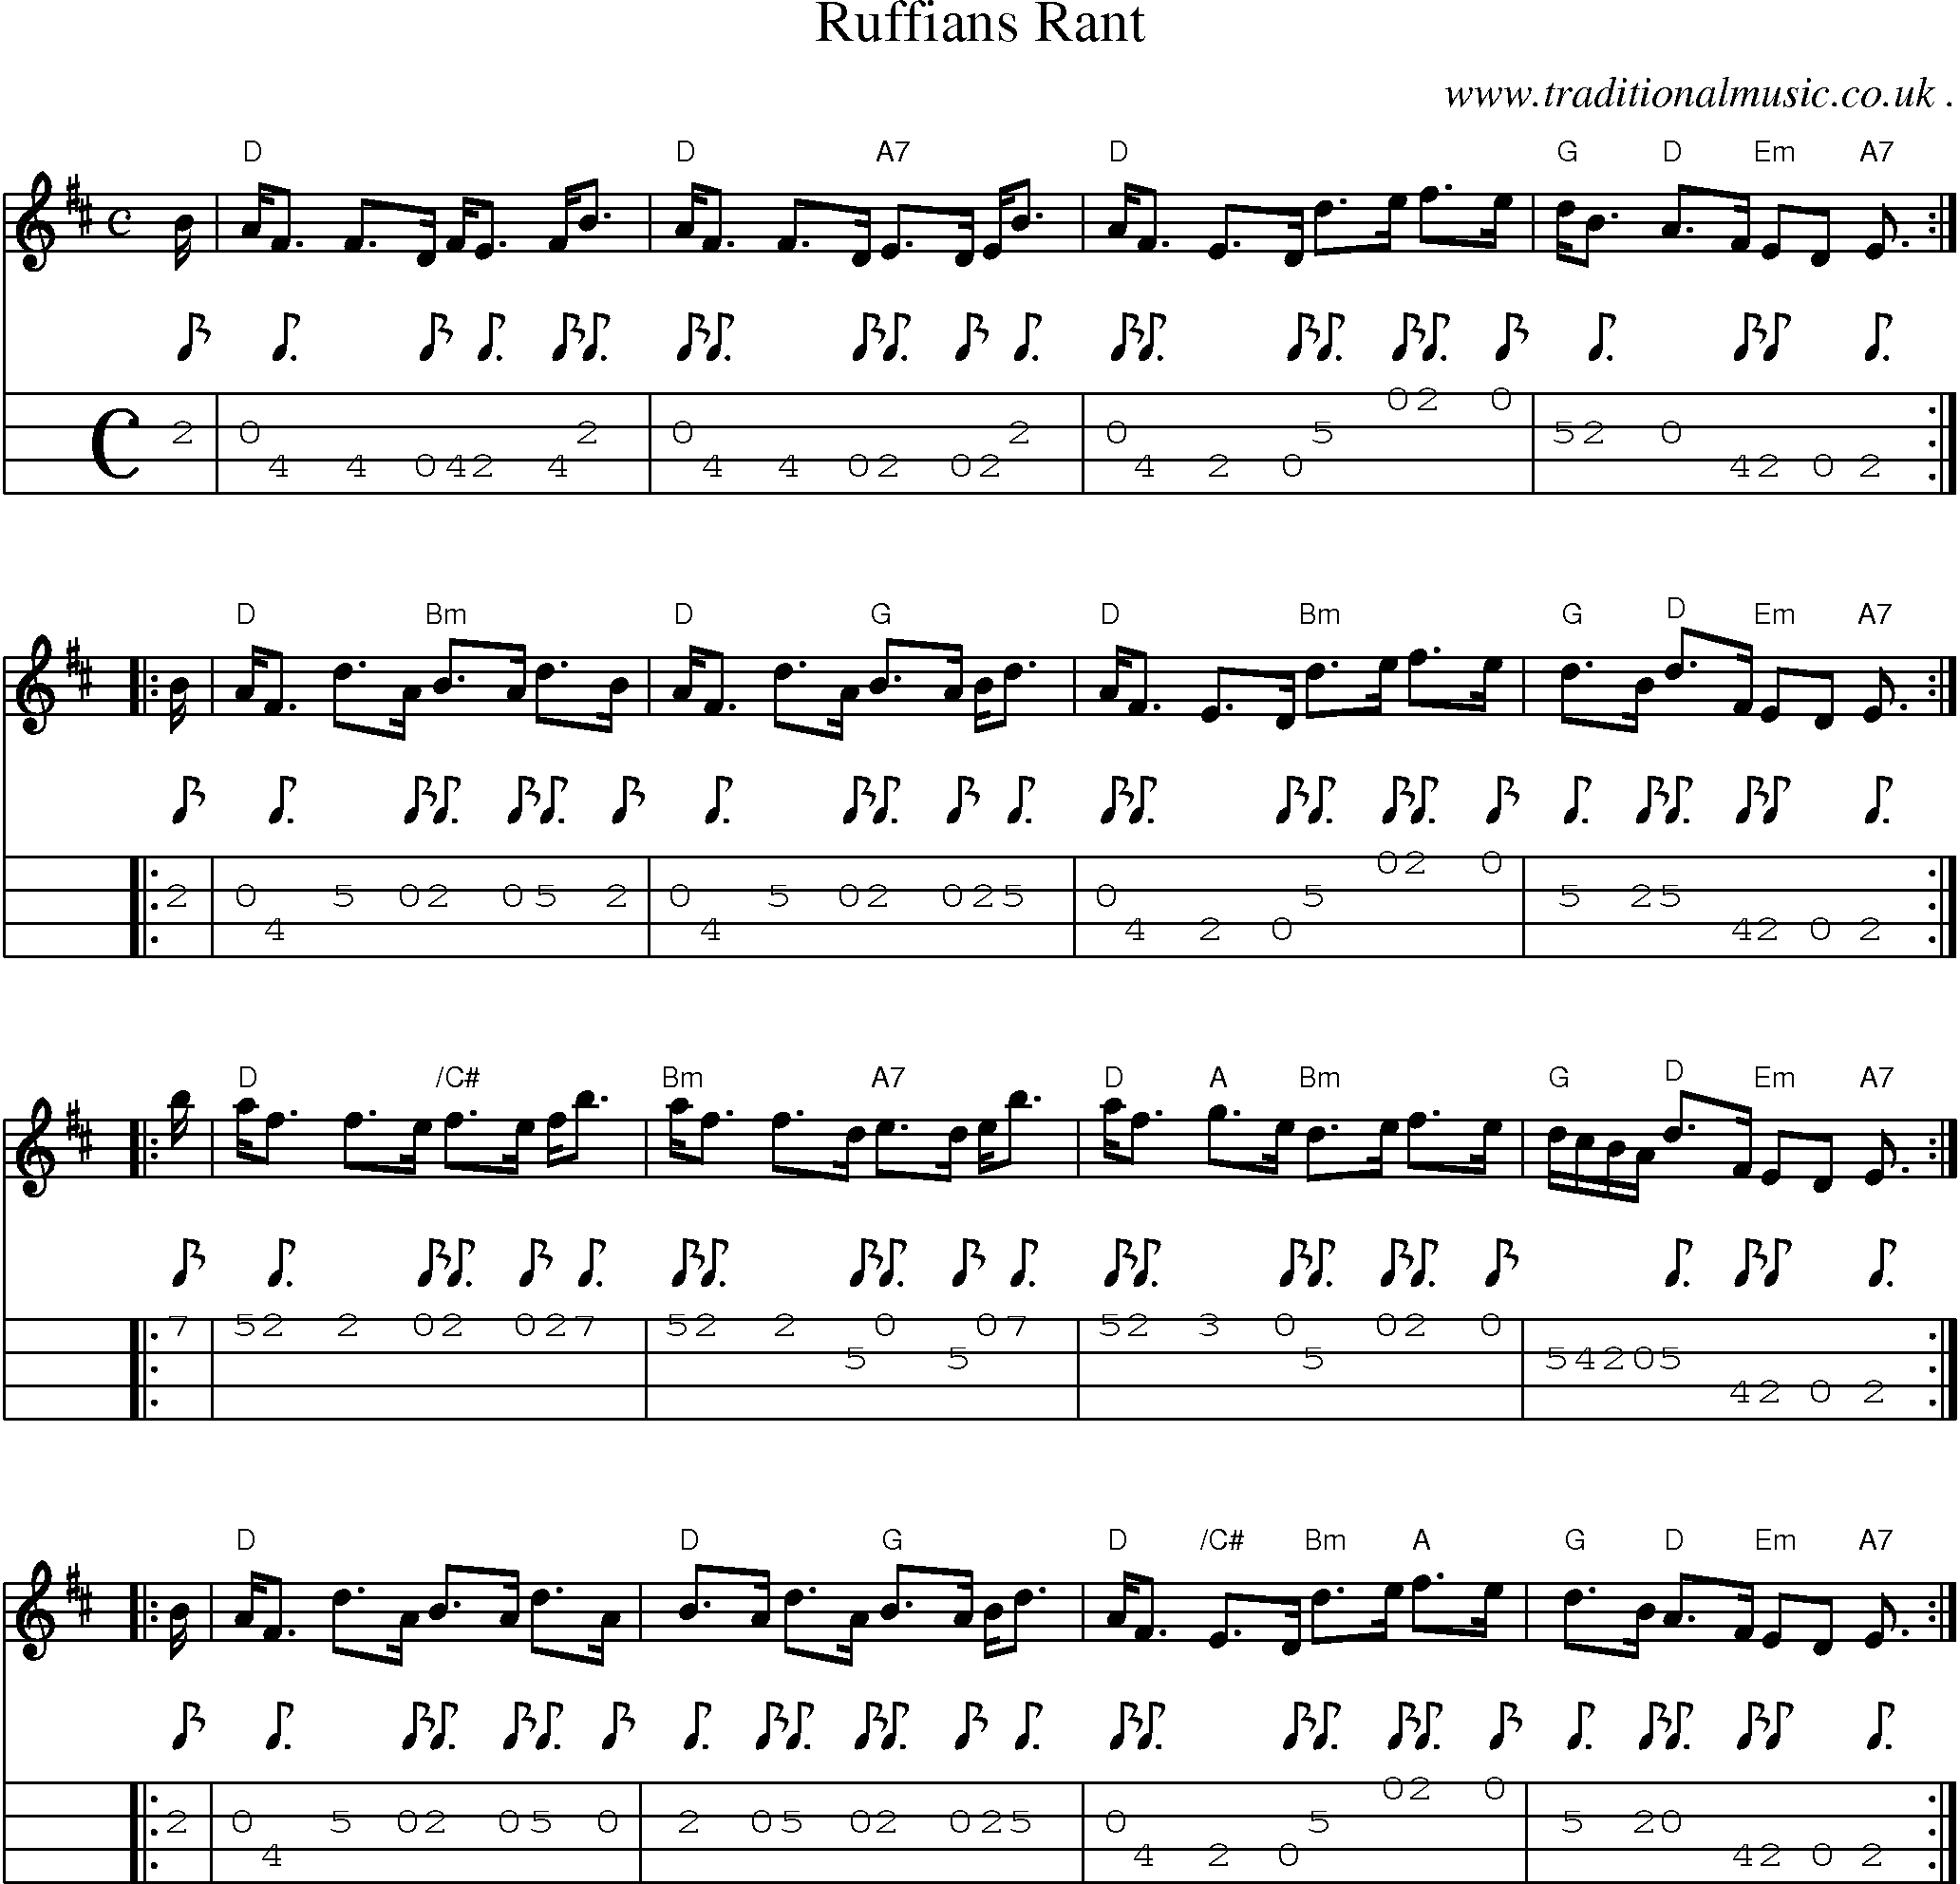 Sheet-music  score, Chords and Mandolin Tabs for Ruffians Rant